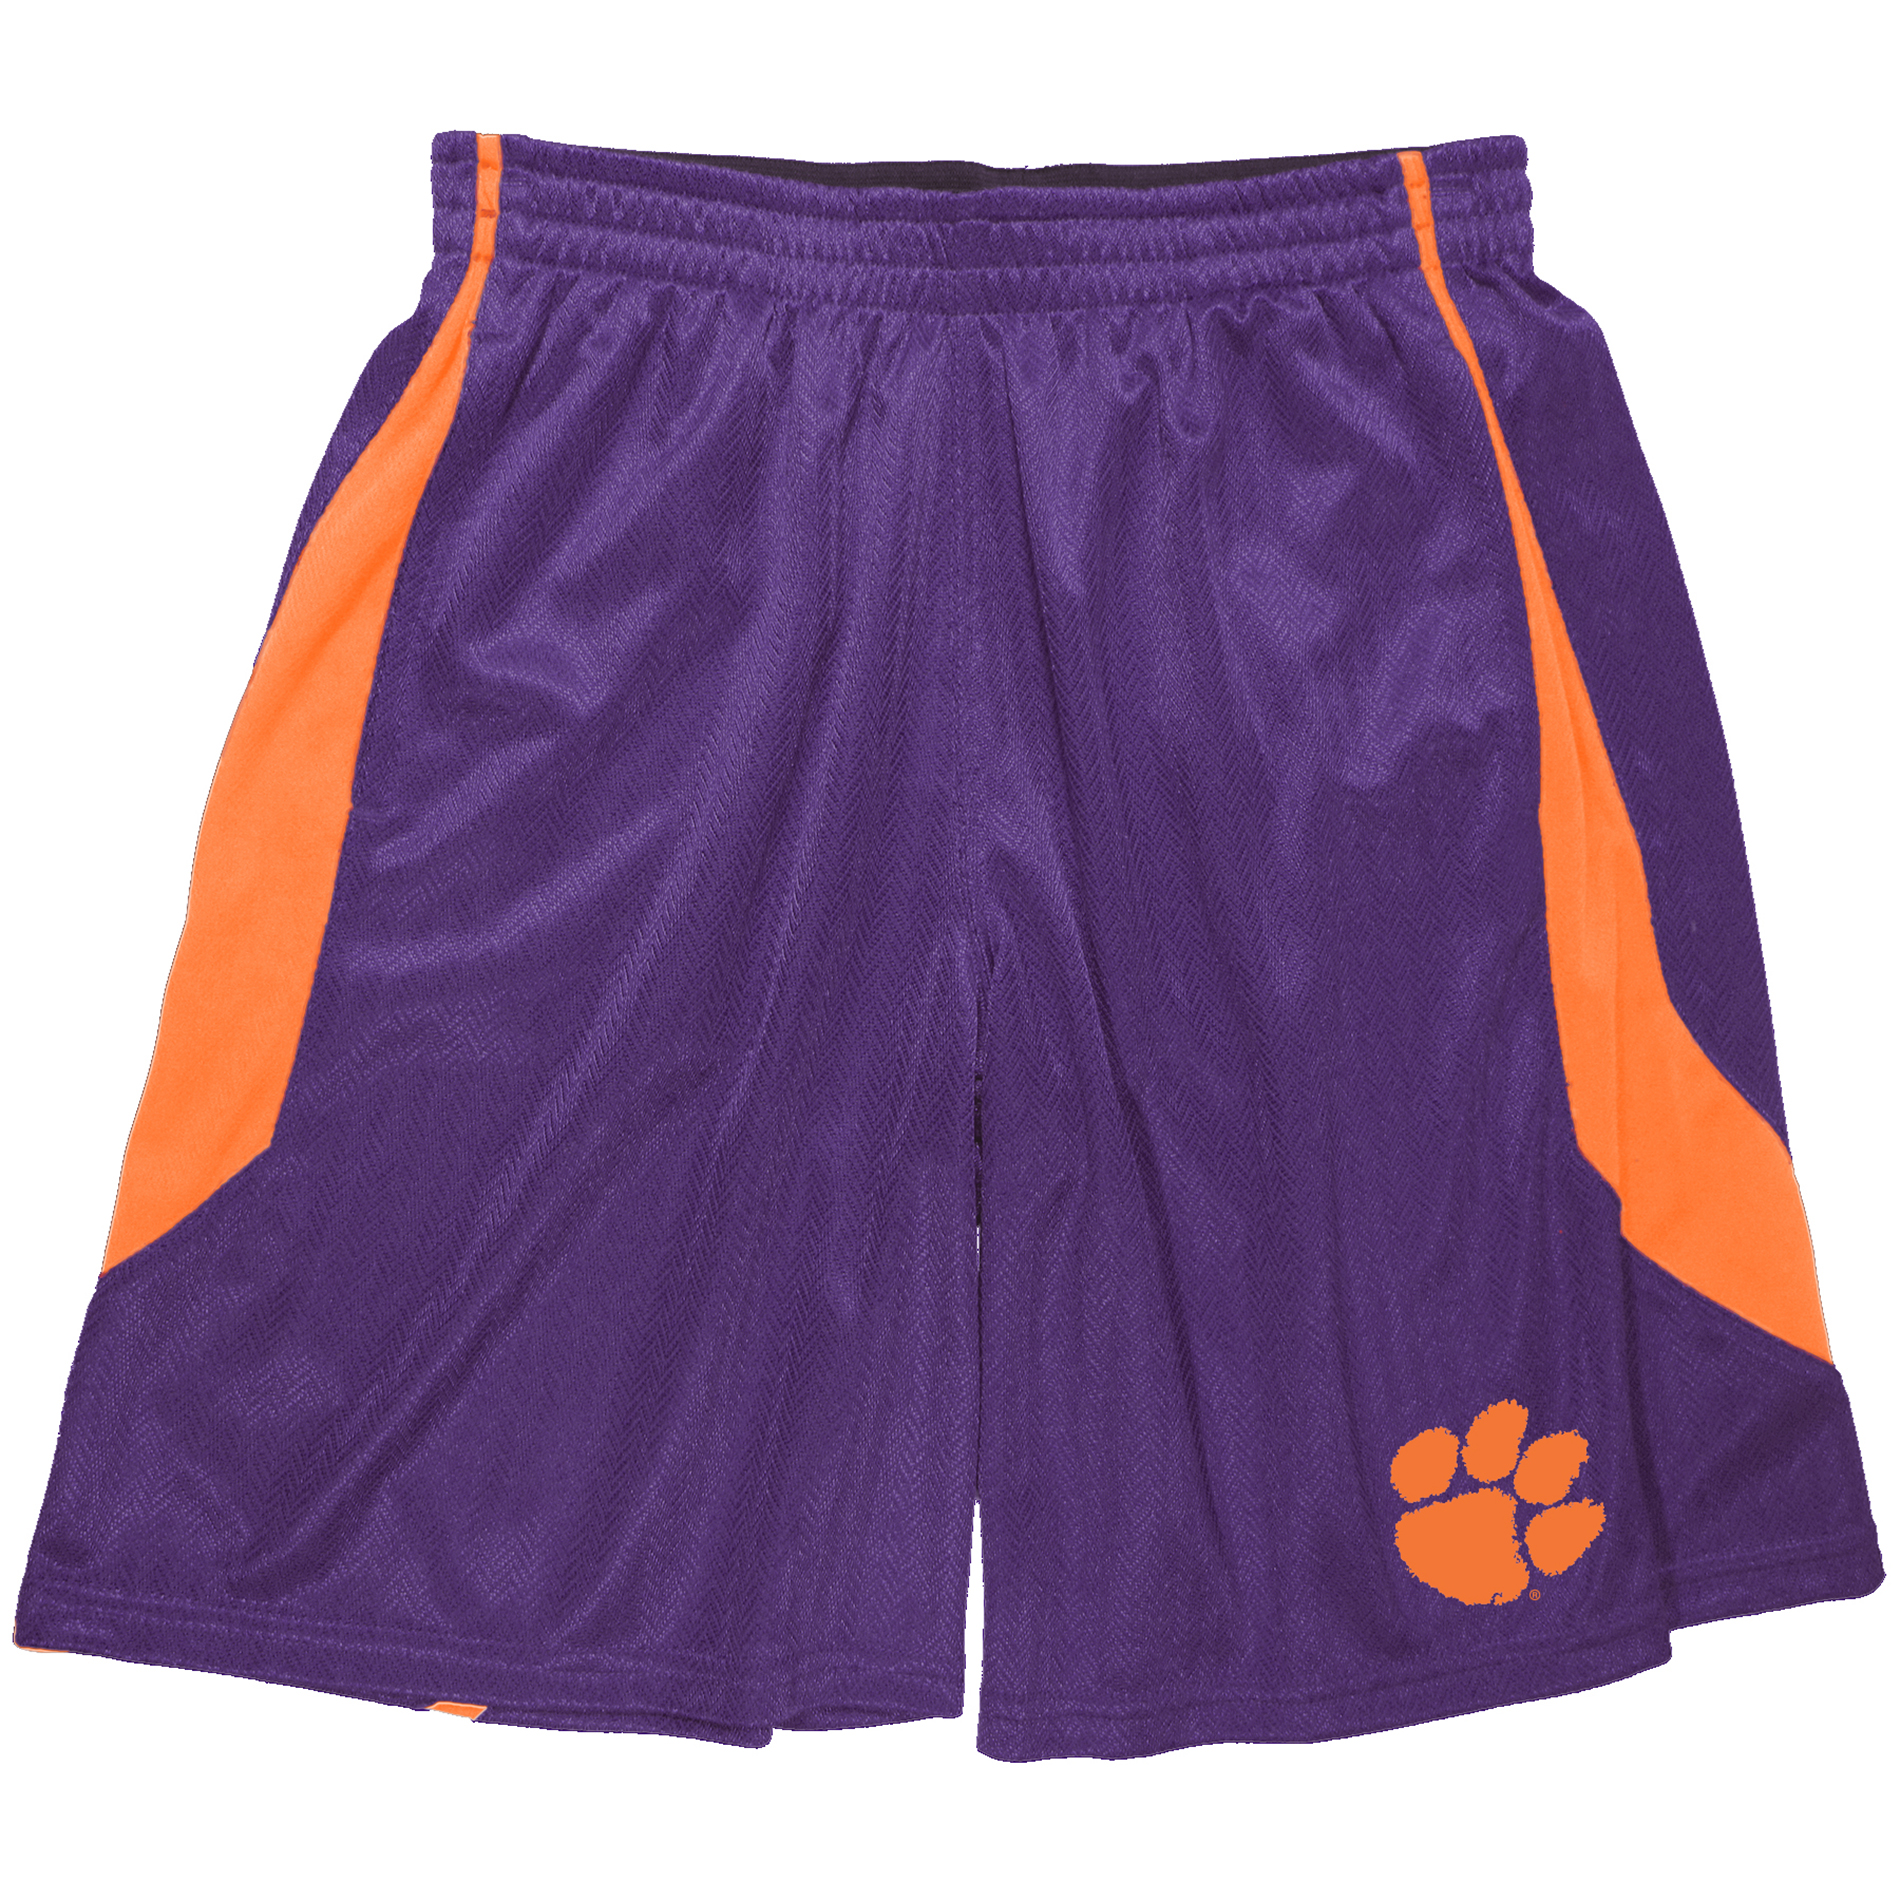 NCAA Boy's Clemson Tigers Basketball Shorts